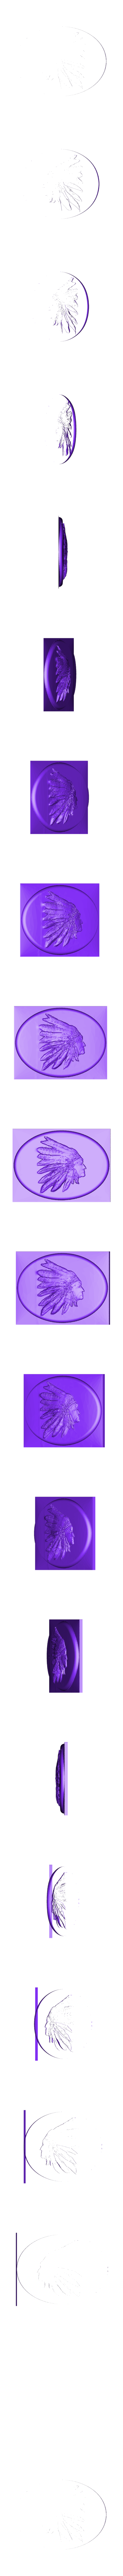 indian.stl Download STL file indian lakota siux native americans plaque • 3D printable model, marctull297